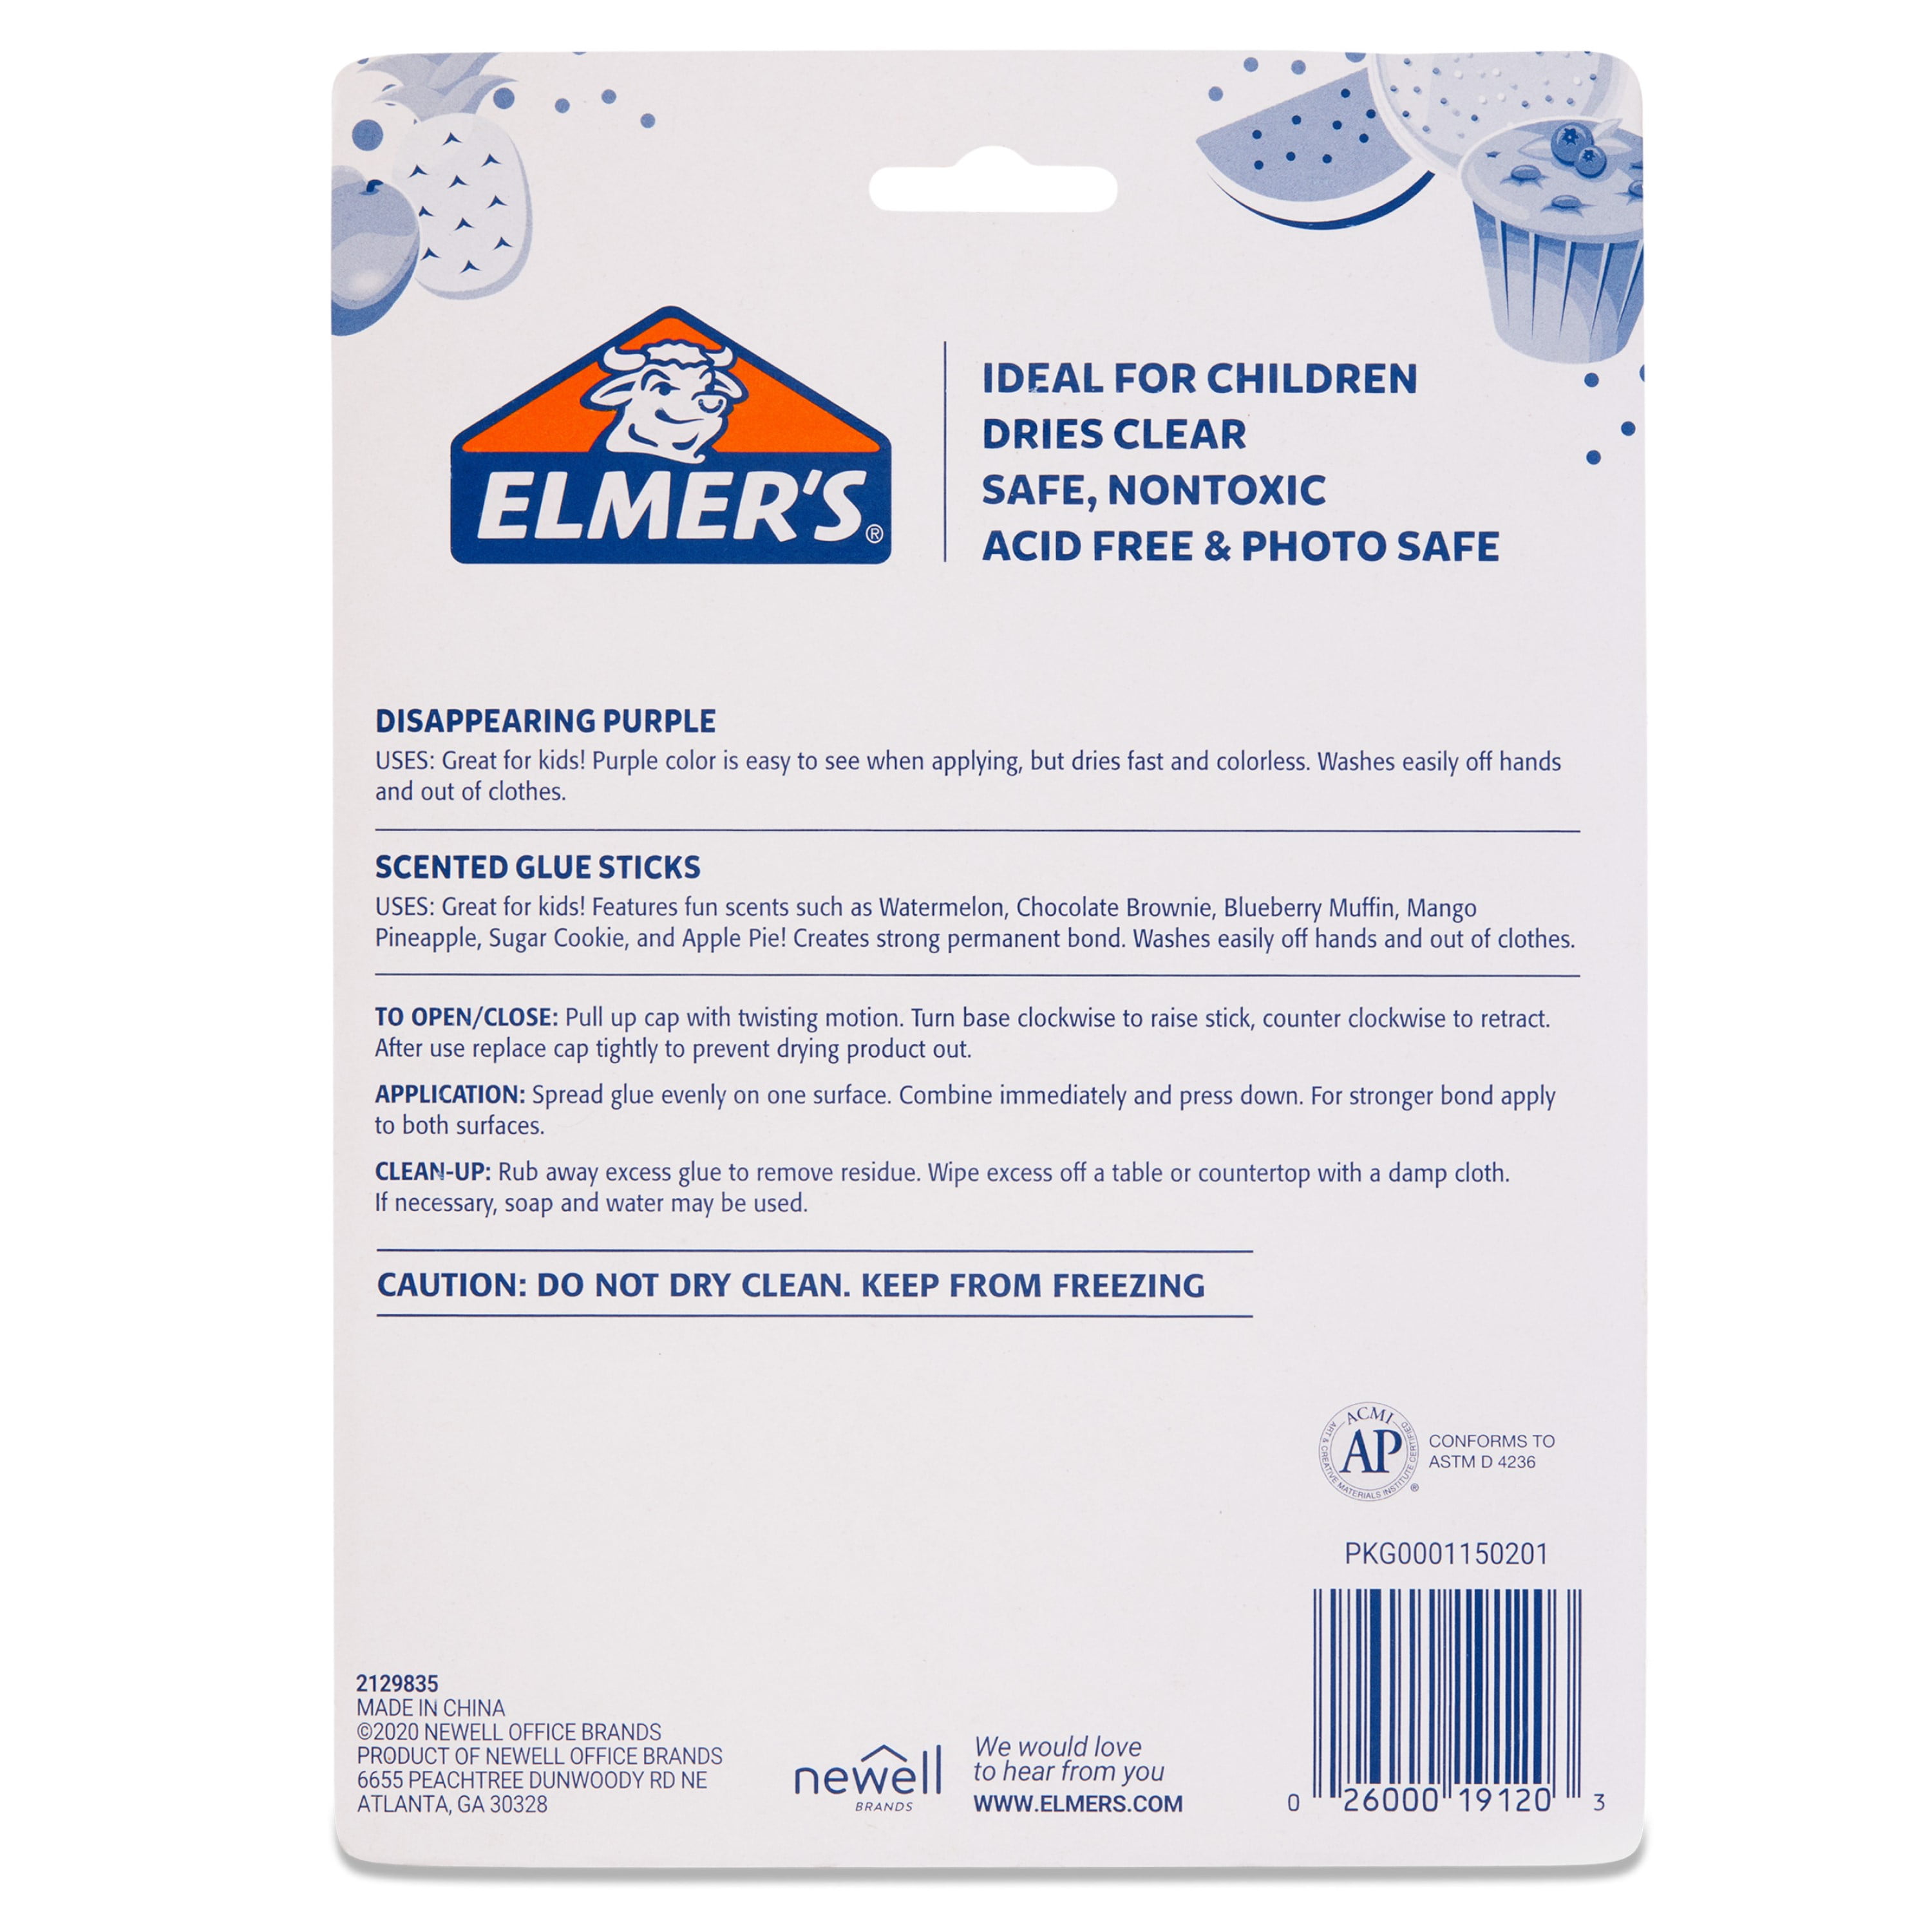 Elmer's Scented Permanent Glue Sticks, Assorted Colors, 4/Pack (2142958)